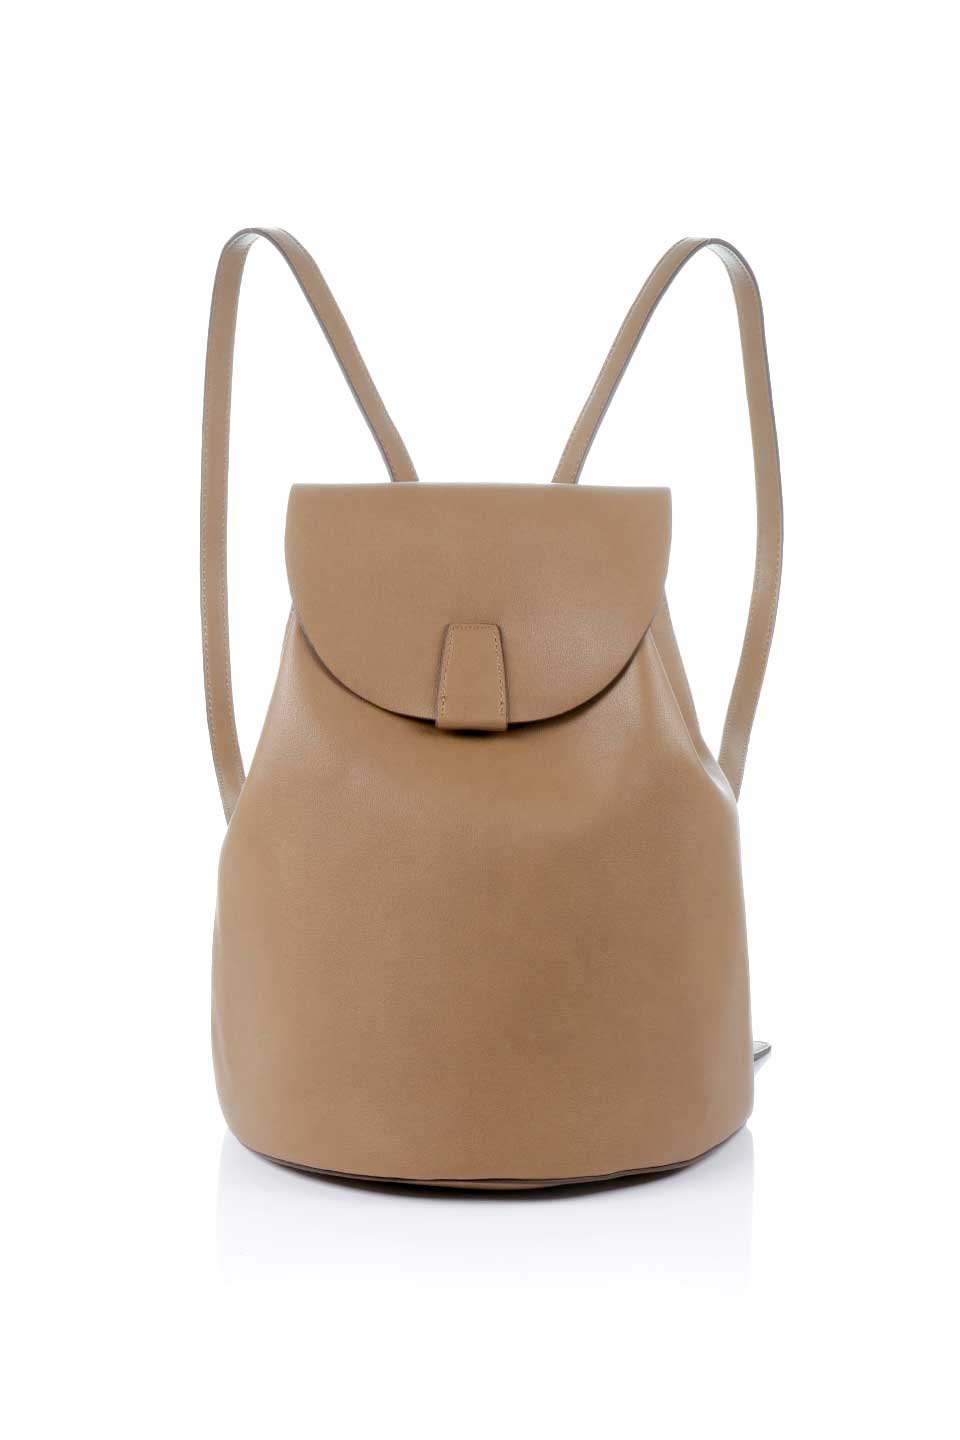 meliebiancoのAubrey(Mocha)ビーガンレザー・ミニリュック/海外ファッション好きにオススメのインポートバッグとかばん、MelieBianco（メリービアンコ）のバッグやその他。使いやすい程よい大きさのシンプルリュック。なめらかな高級ビーガンレザーを使用したシンプルデザインのアイテム。